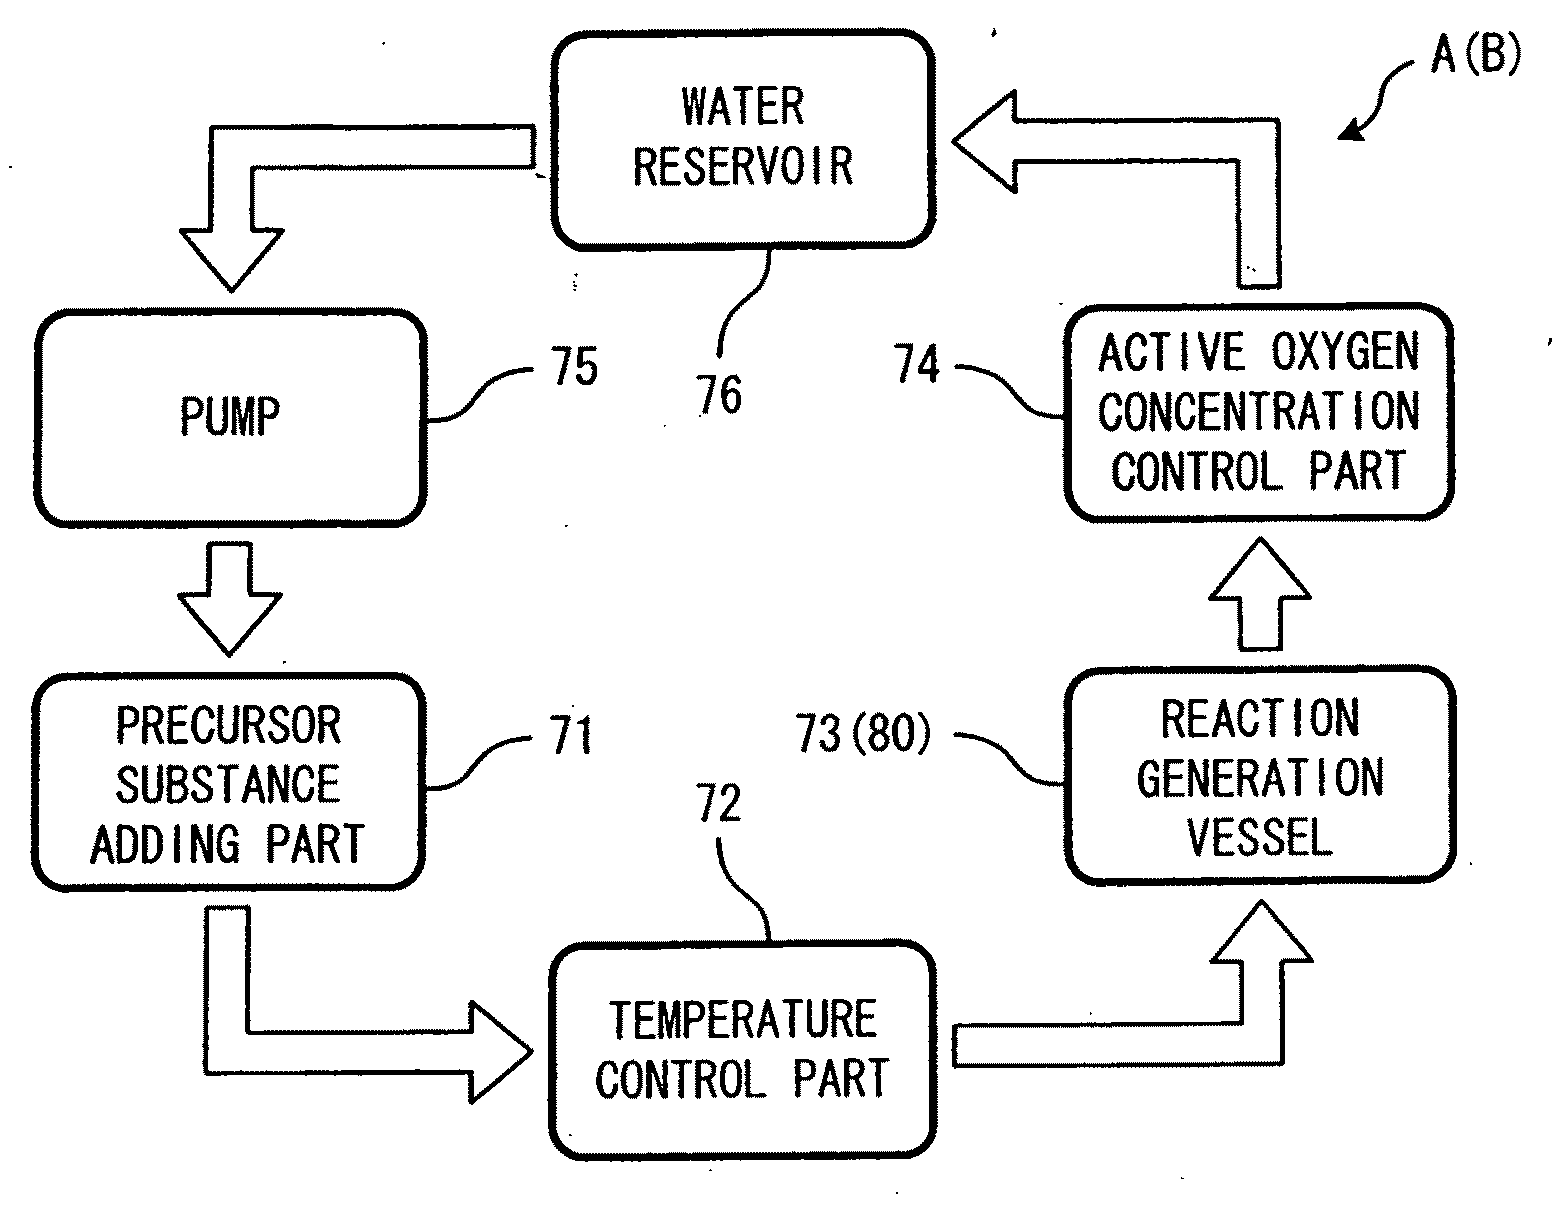 Apparatus for producing water having redox activity